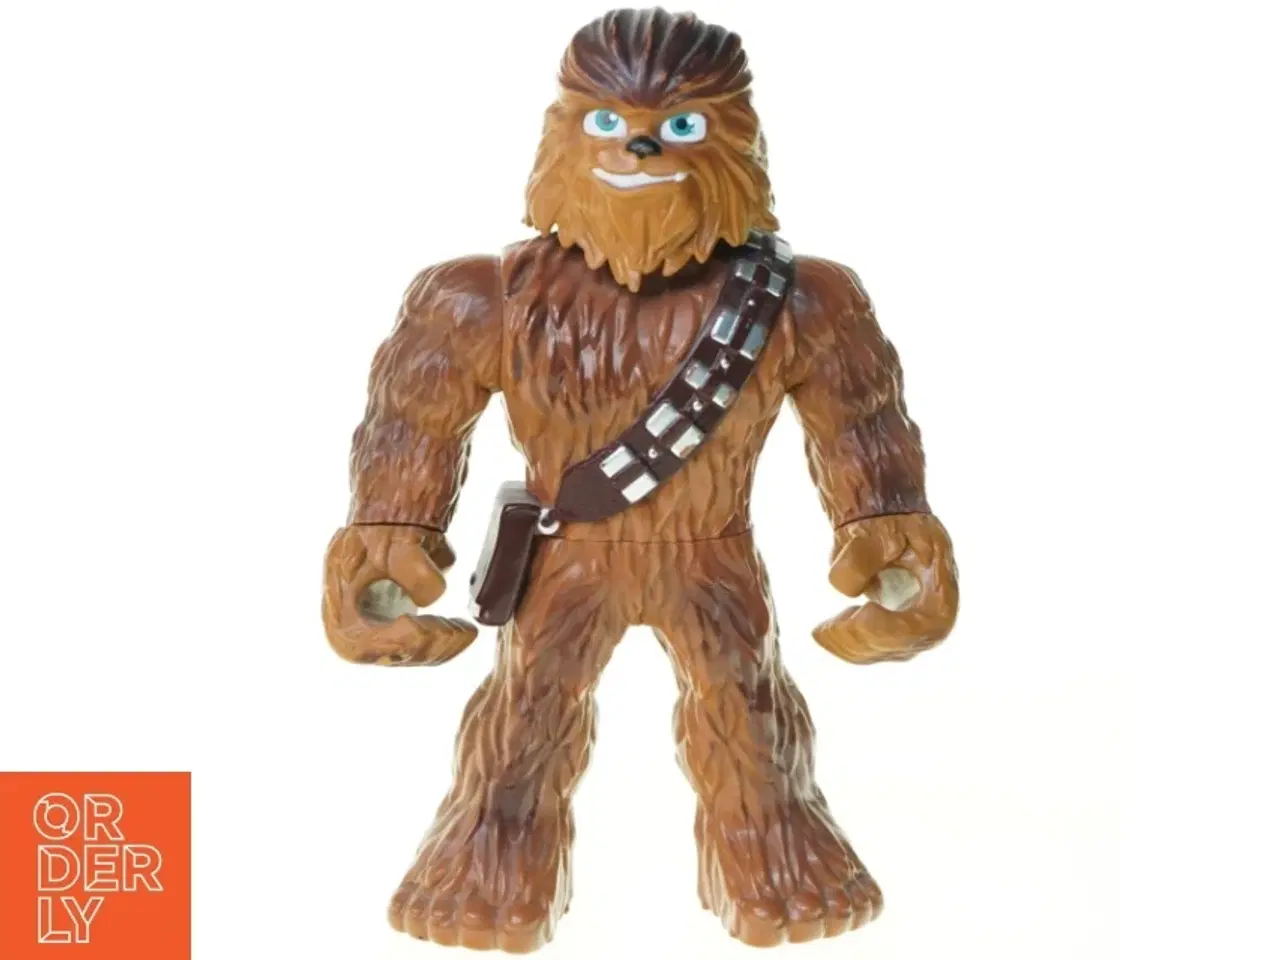 Billede 1 - Chewbacca star wars figur fra Hasbro (str. 26 x 16 cm)